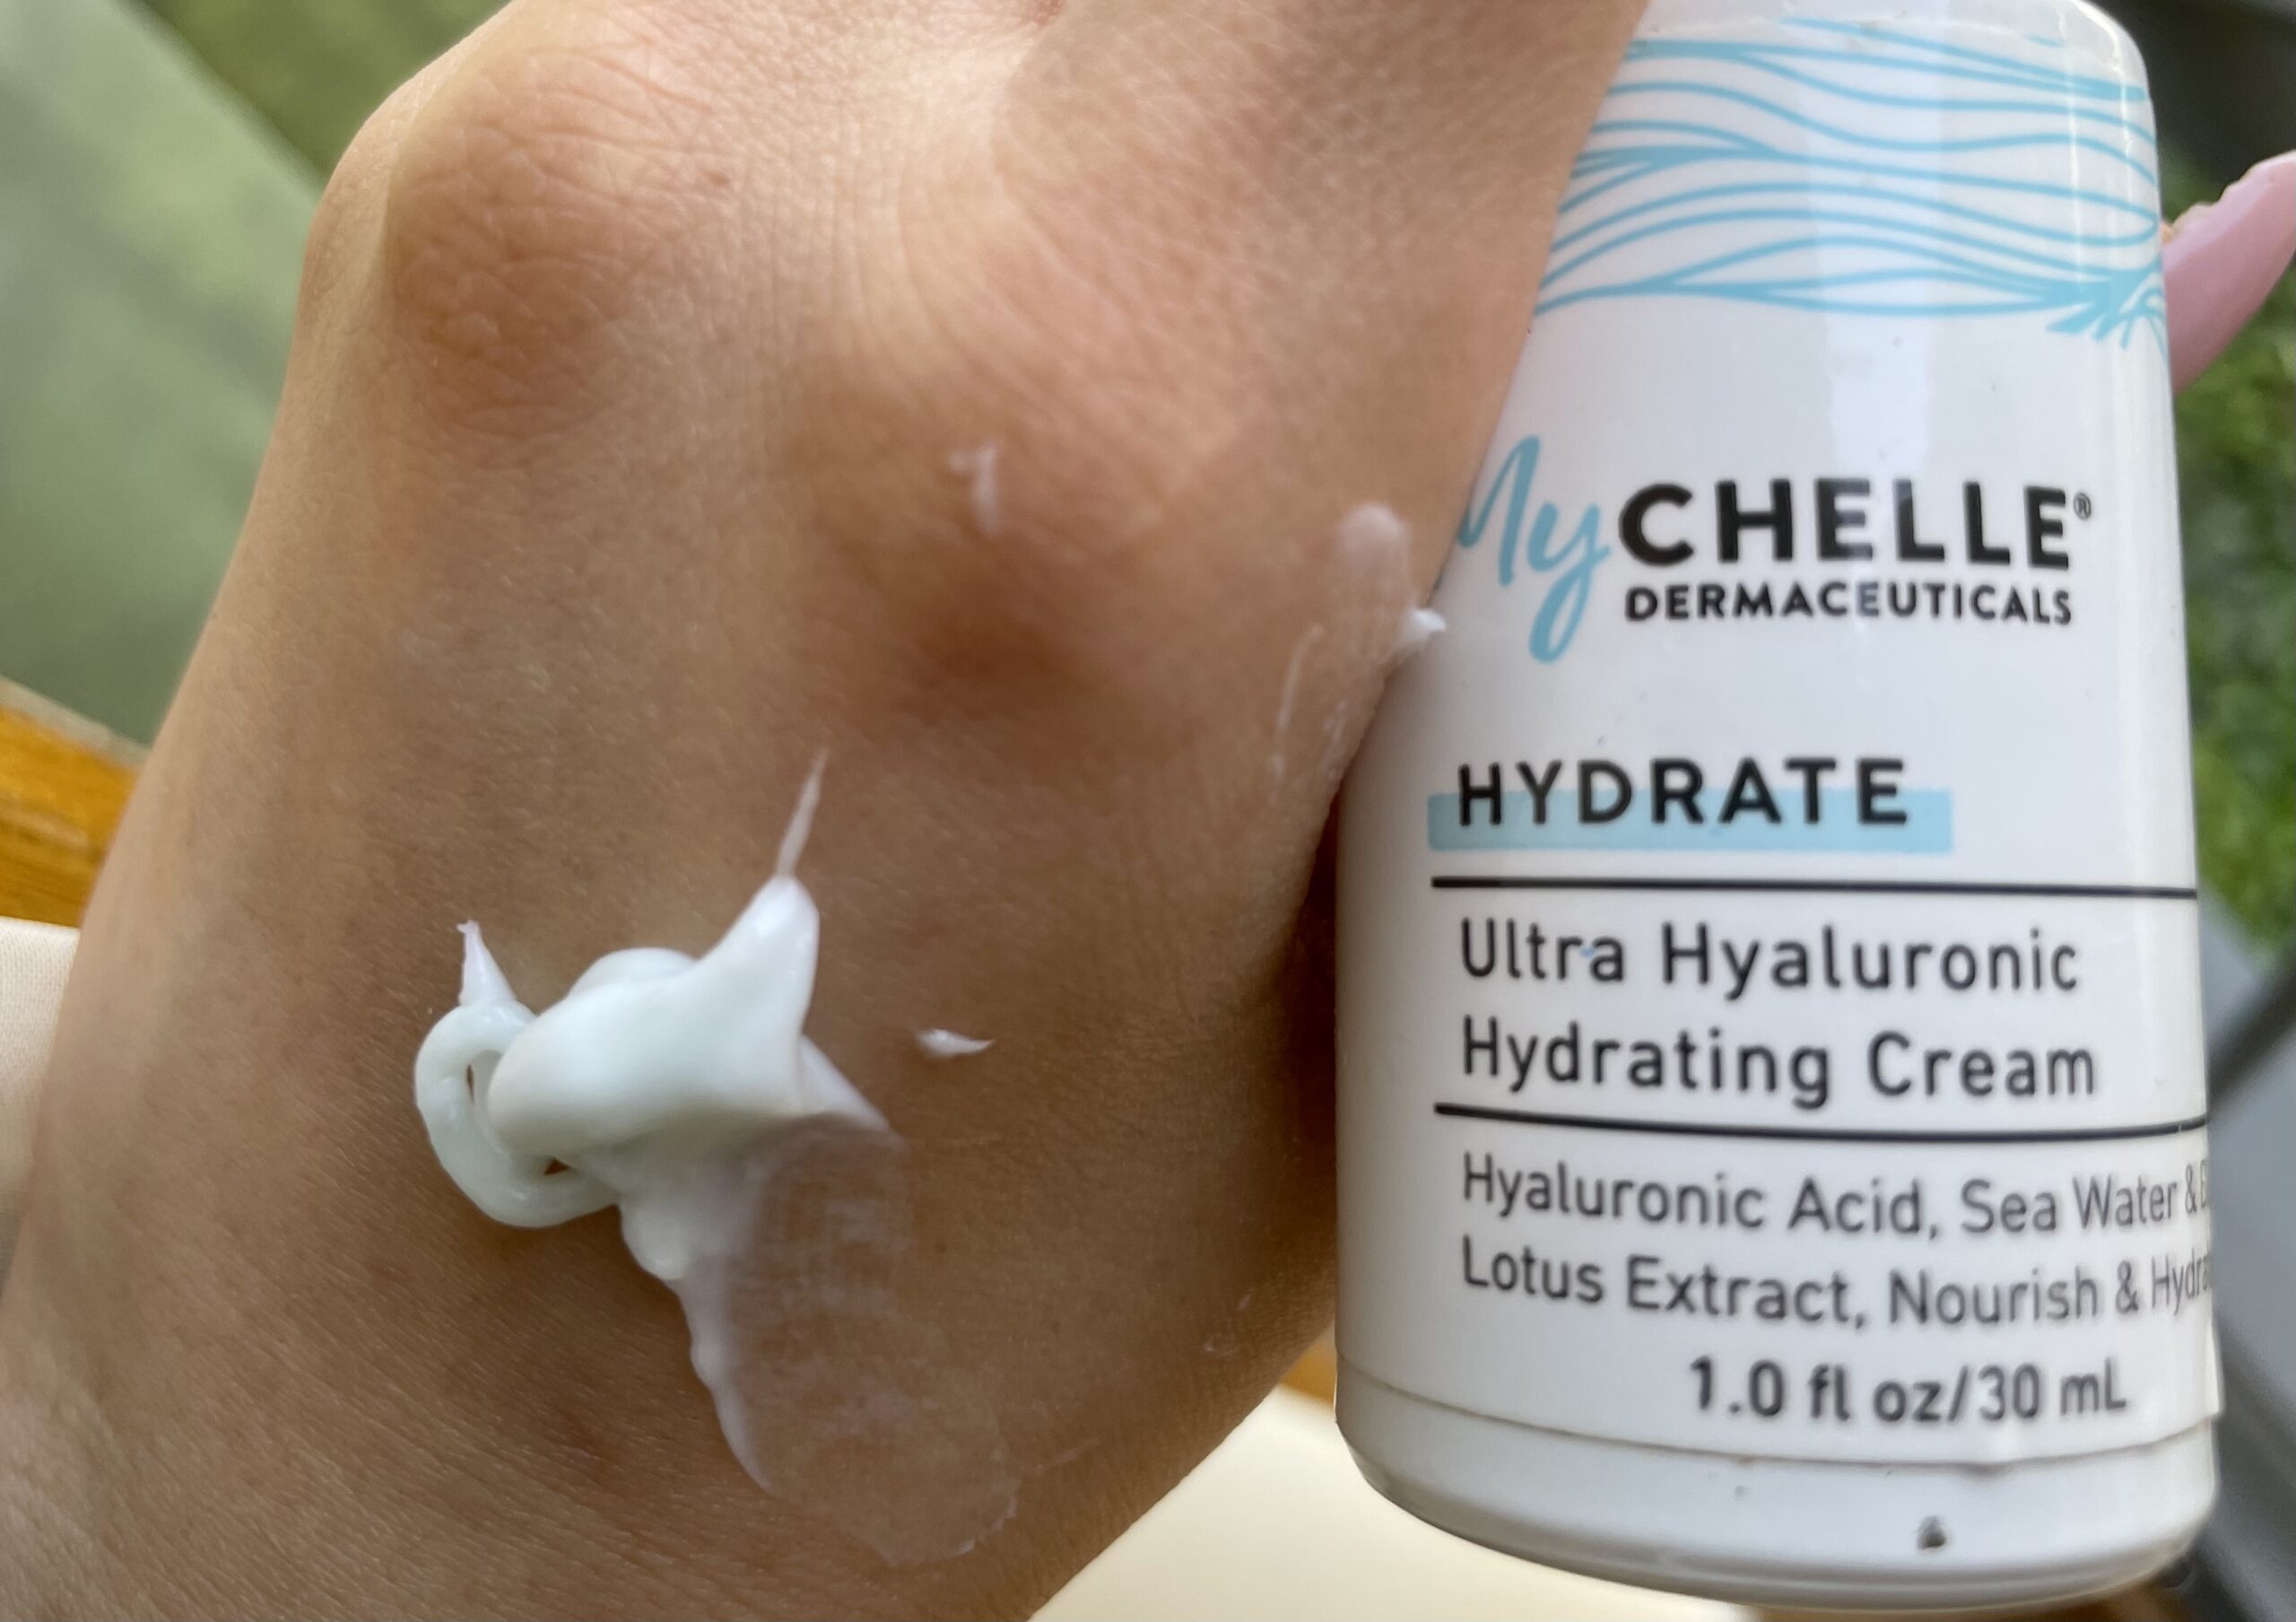 Mychelle hydrating cream